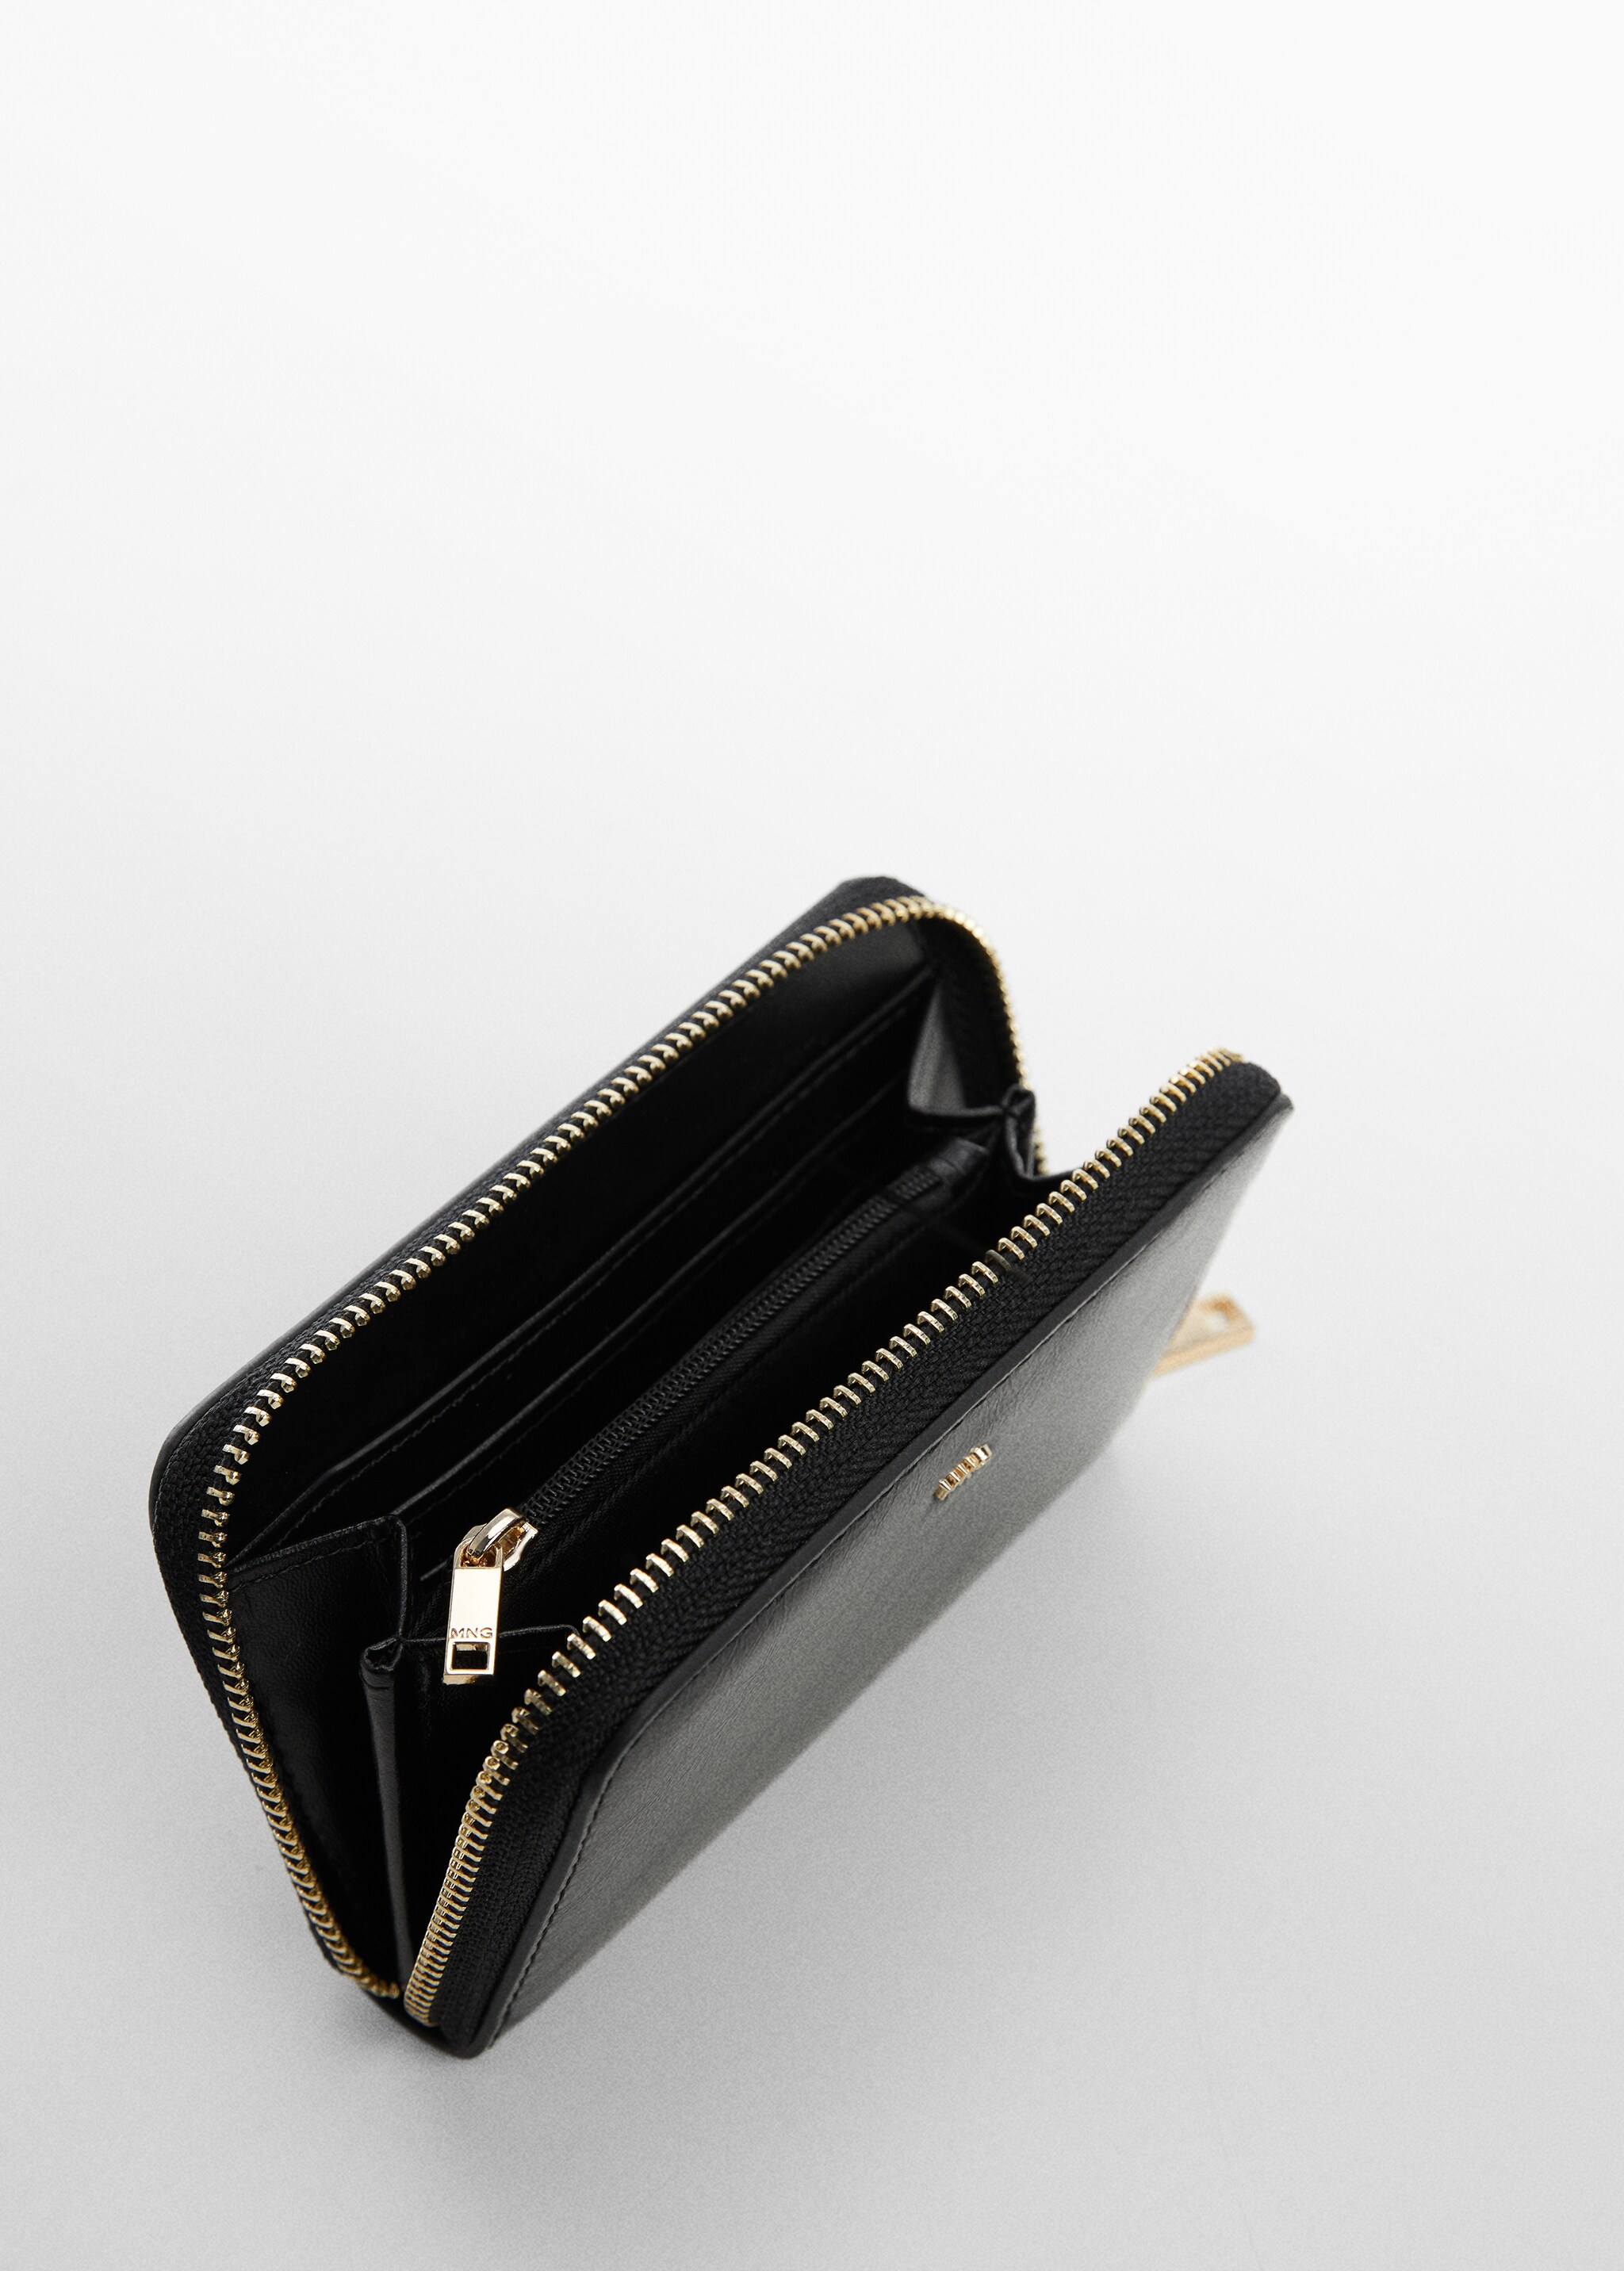 Embossed wallet with logo - Medium plane